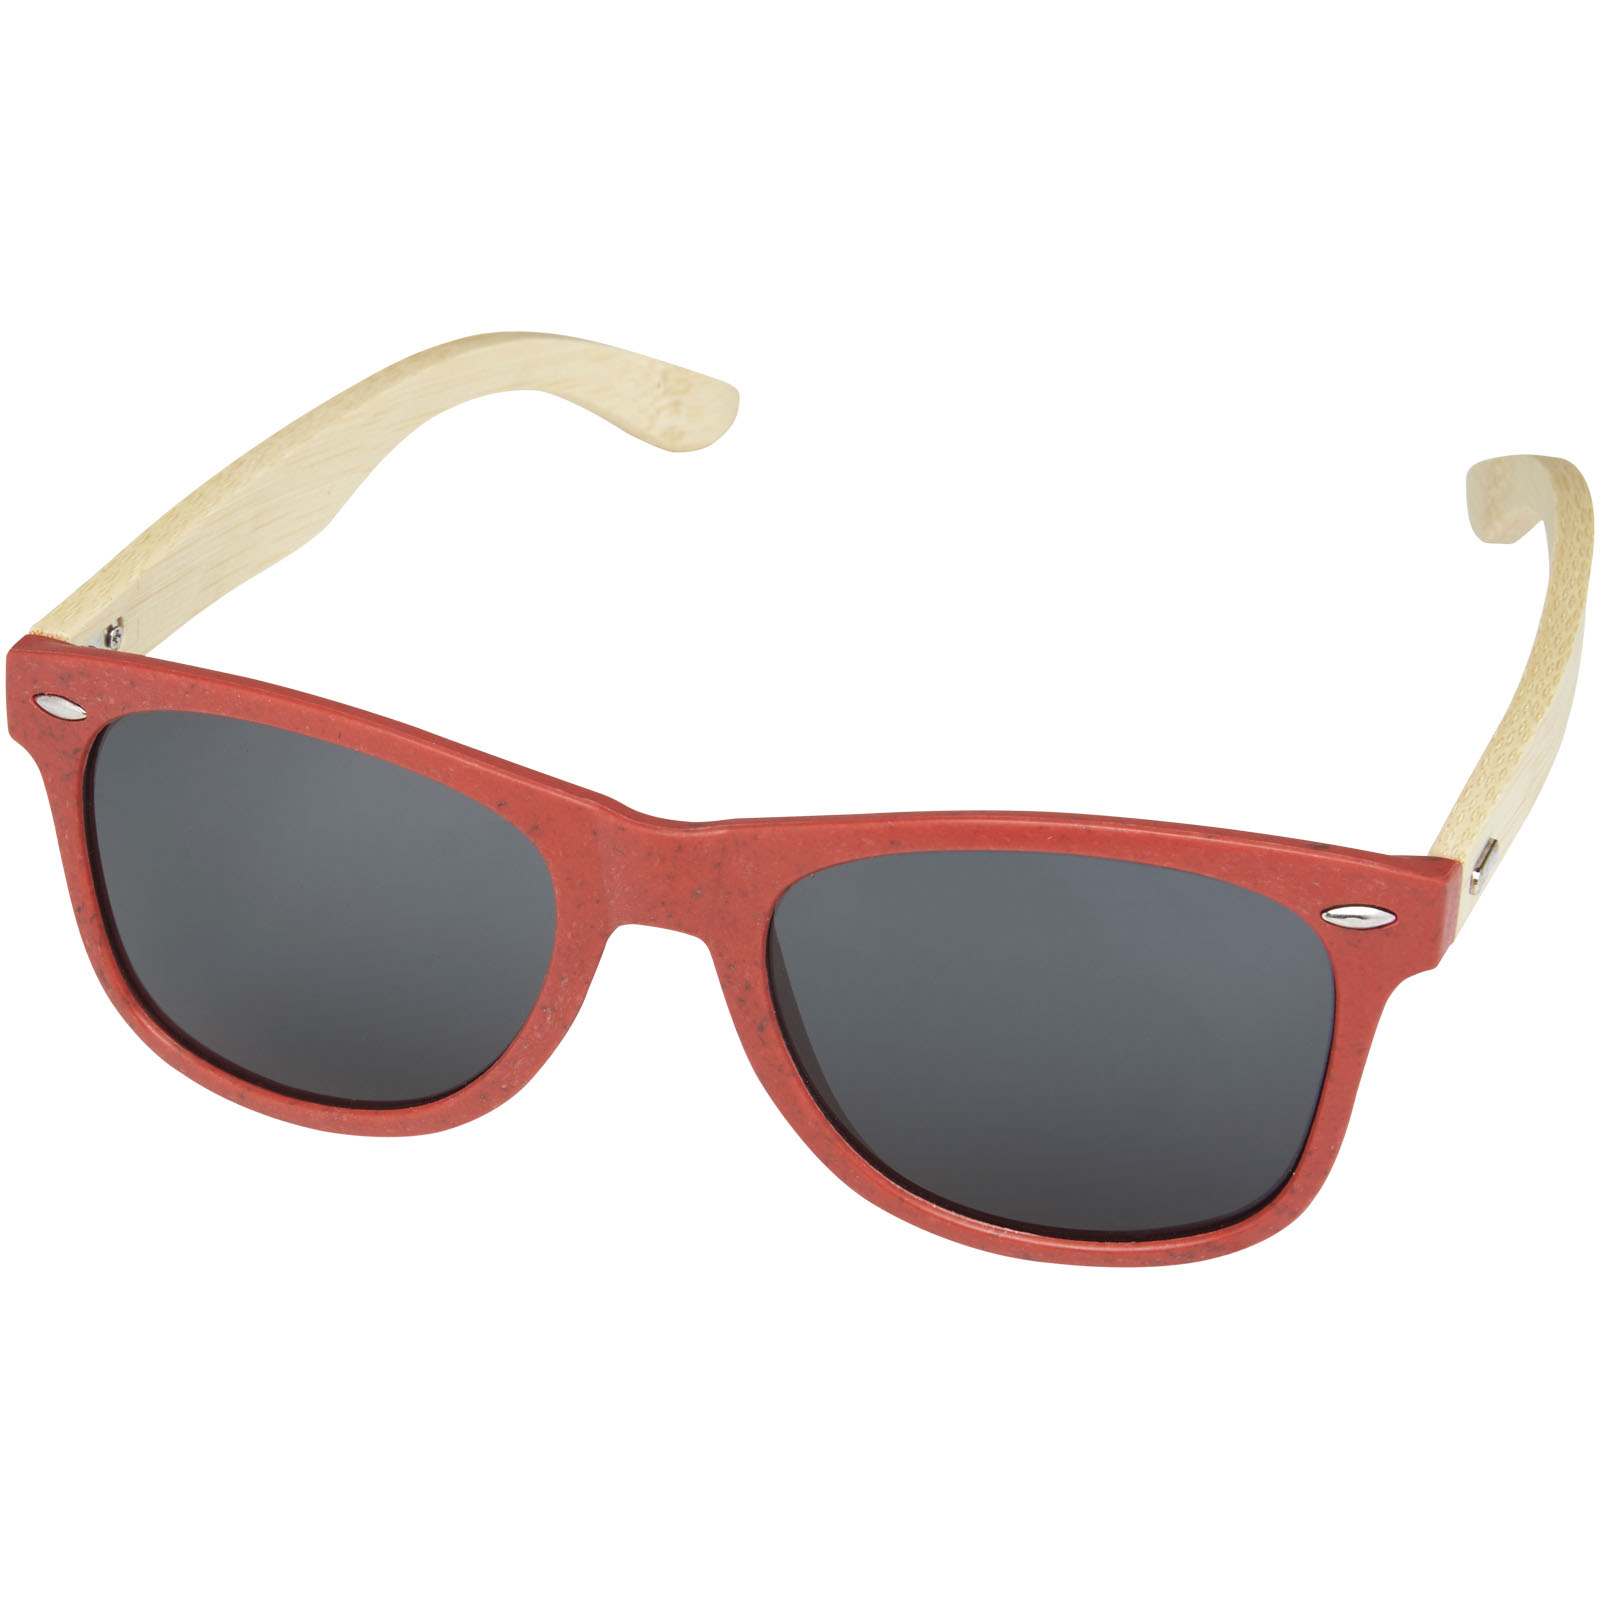 Advertising Sunglasses - Sun Ray bamboo sunglasses - 0